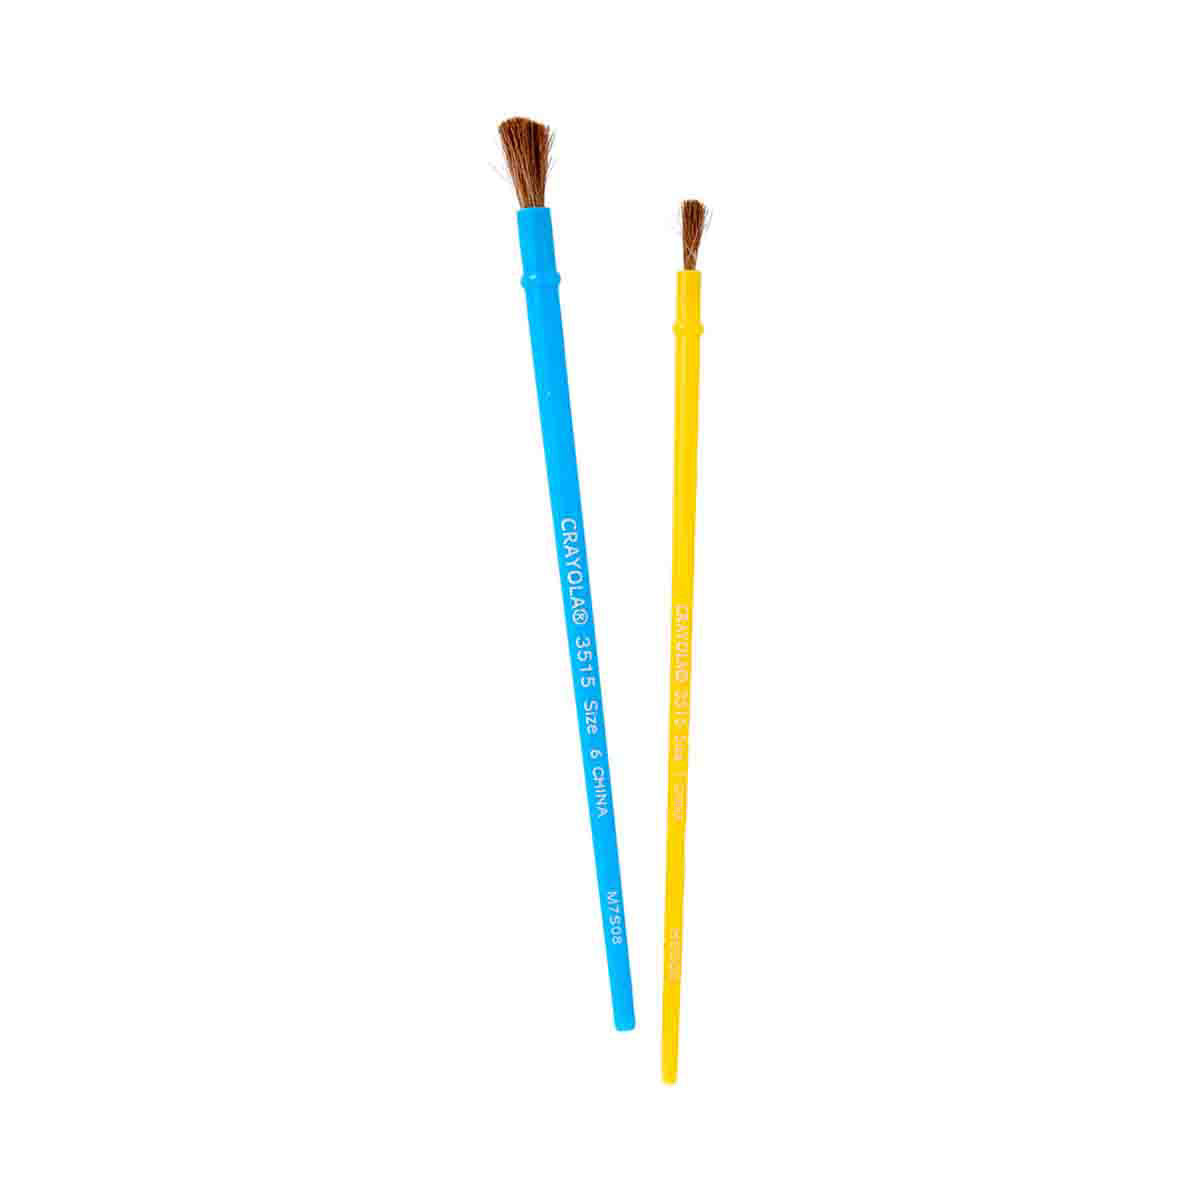 Crayola Art and Craft Brush Set, 8 pc - Baker's